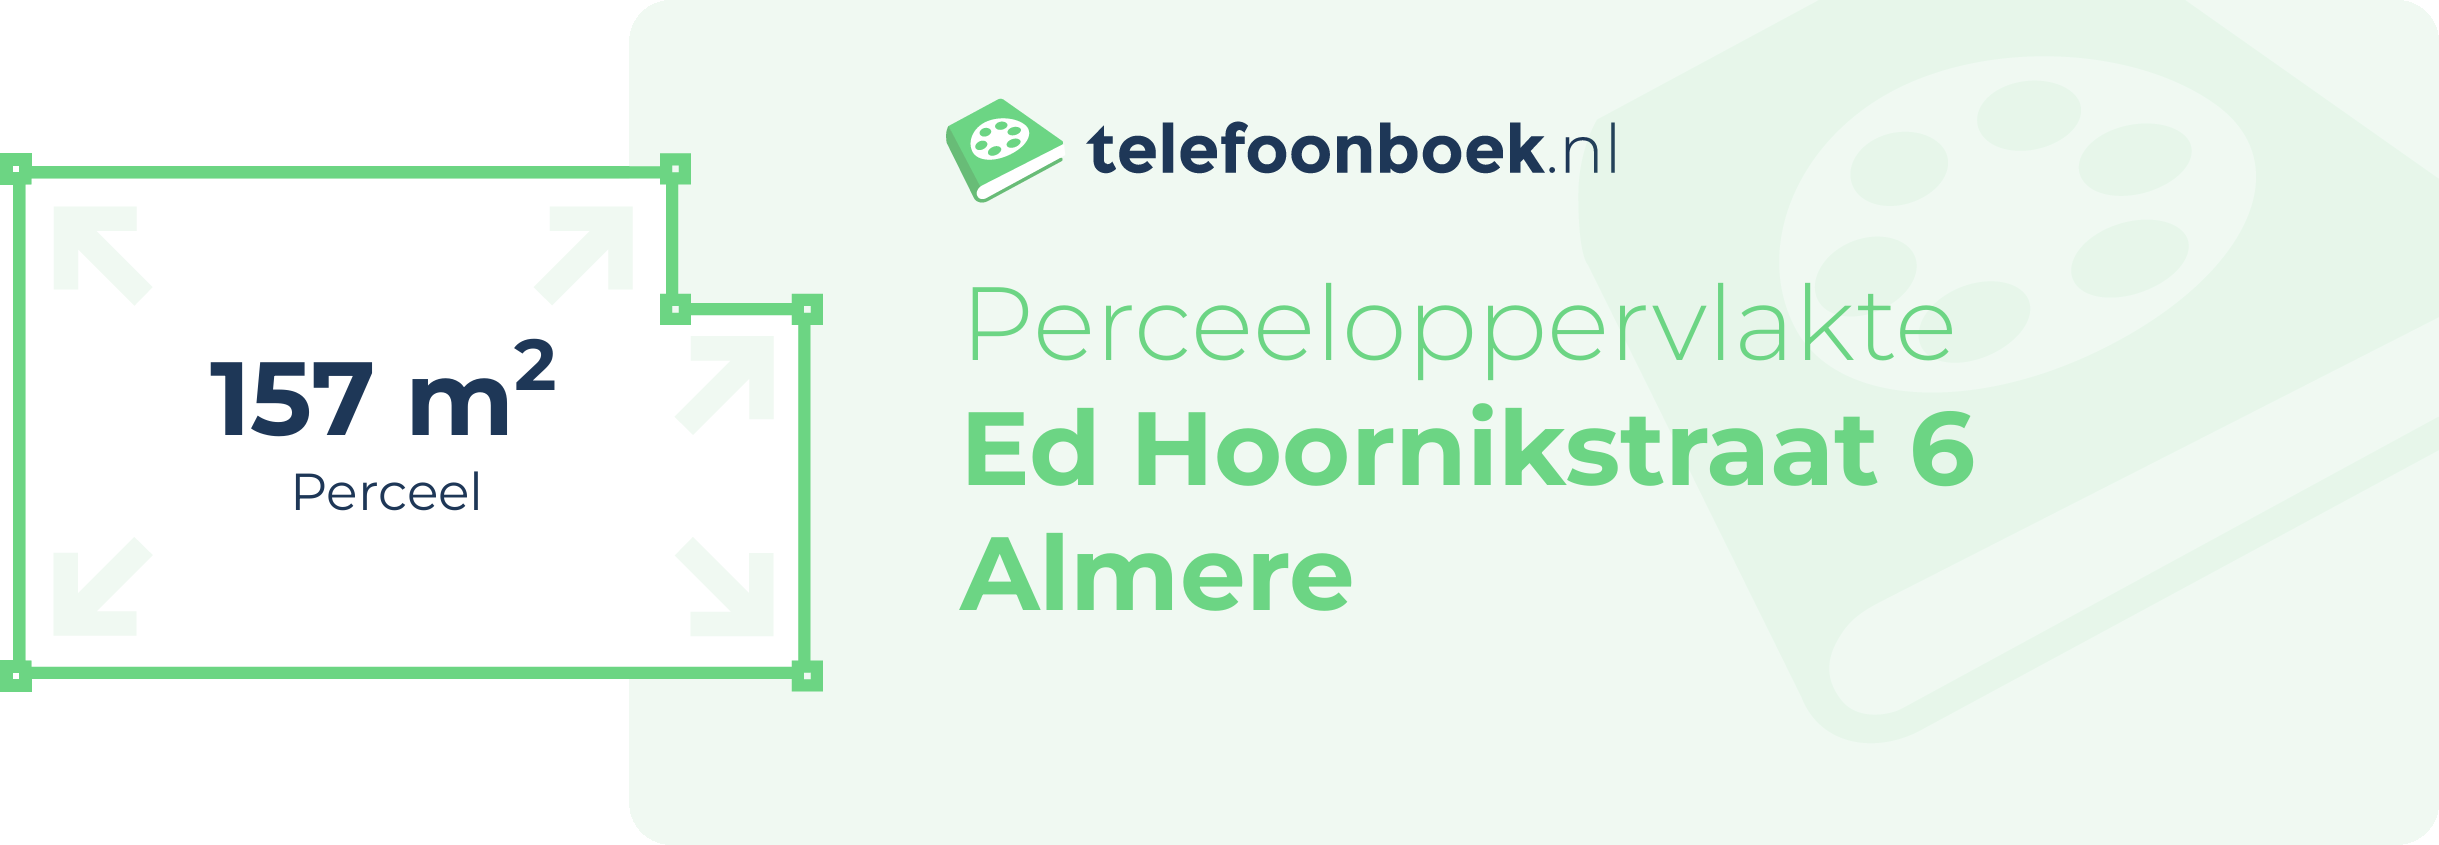 Perceeloppervlakte Ed Hoornikstraat 6 Almere